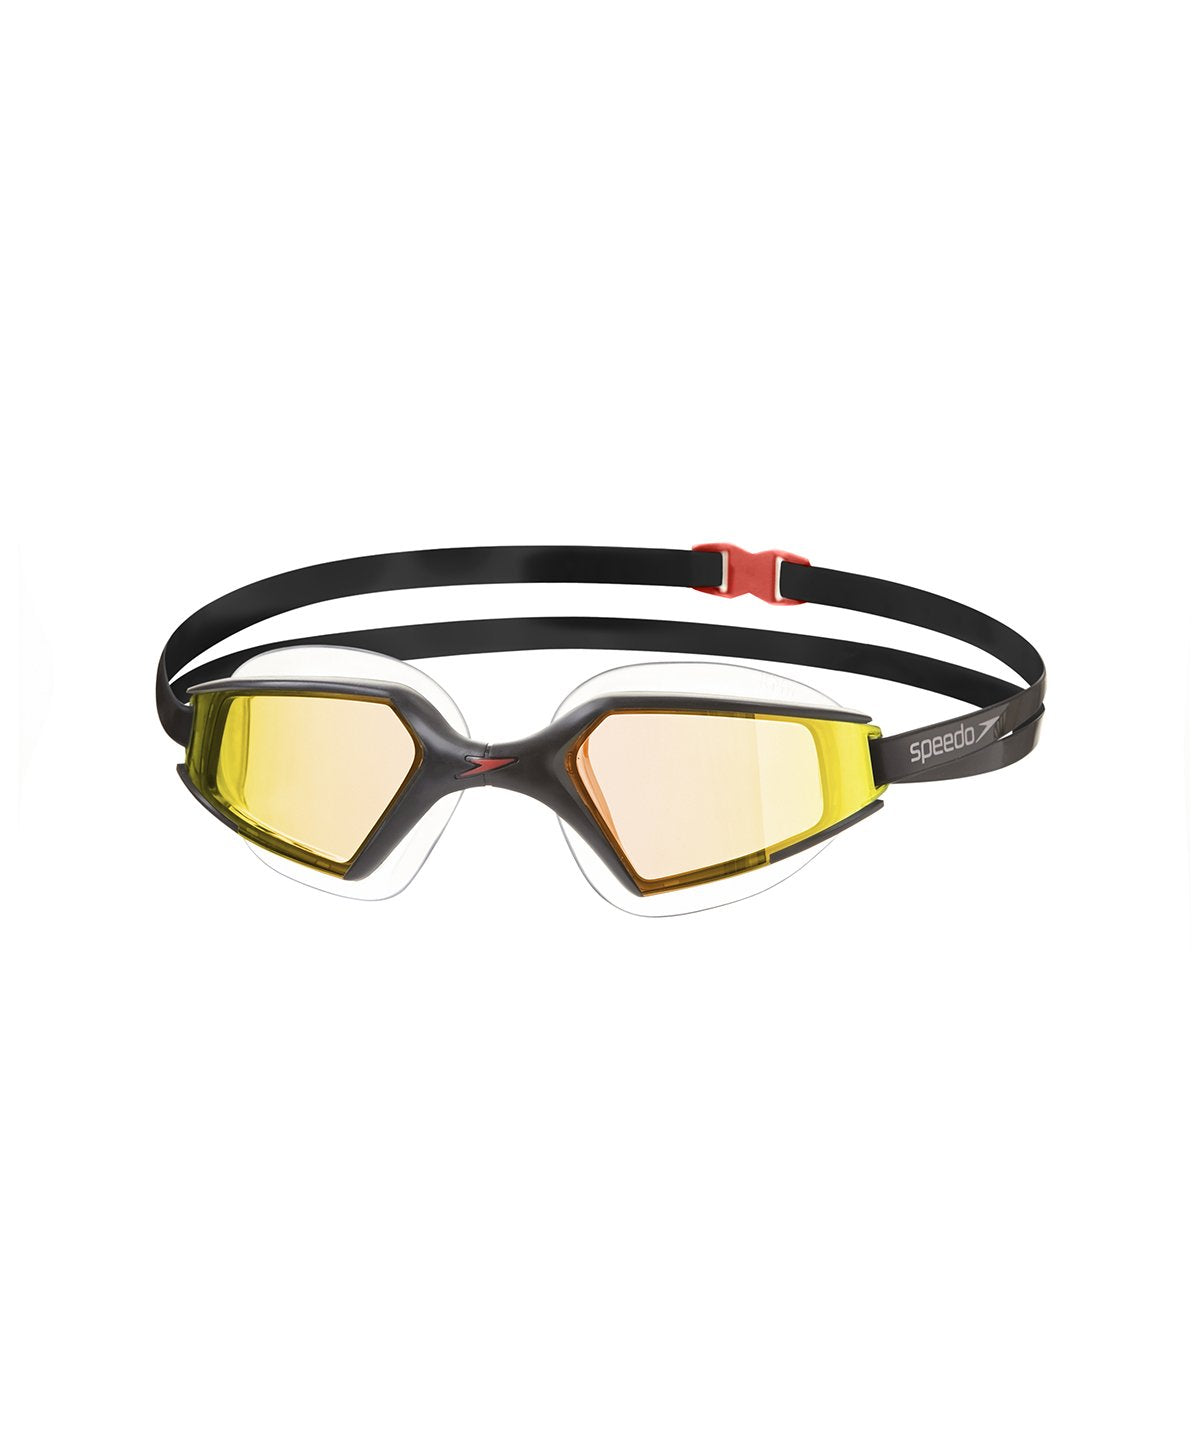 Speedo Unisex-Adult Aquapulse Max Mirror 2 Goggles - Best Price online Prokicksports.com